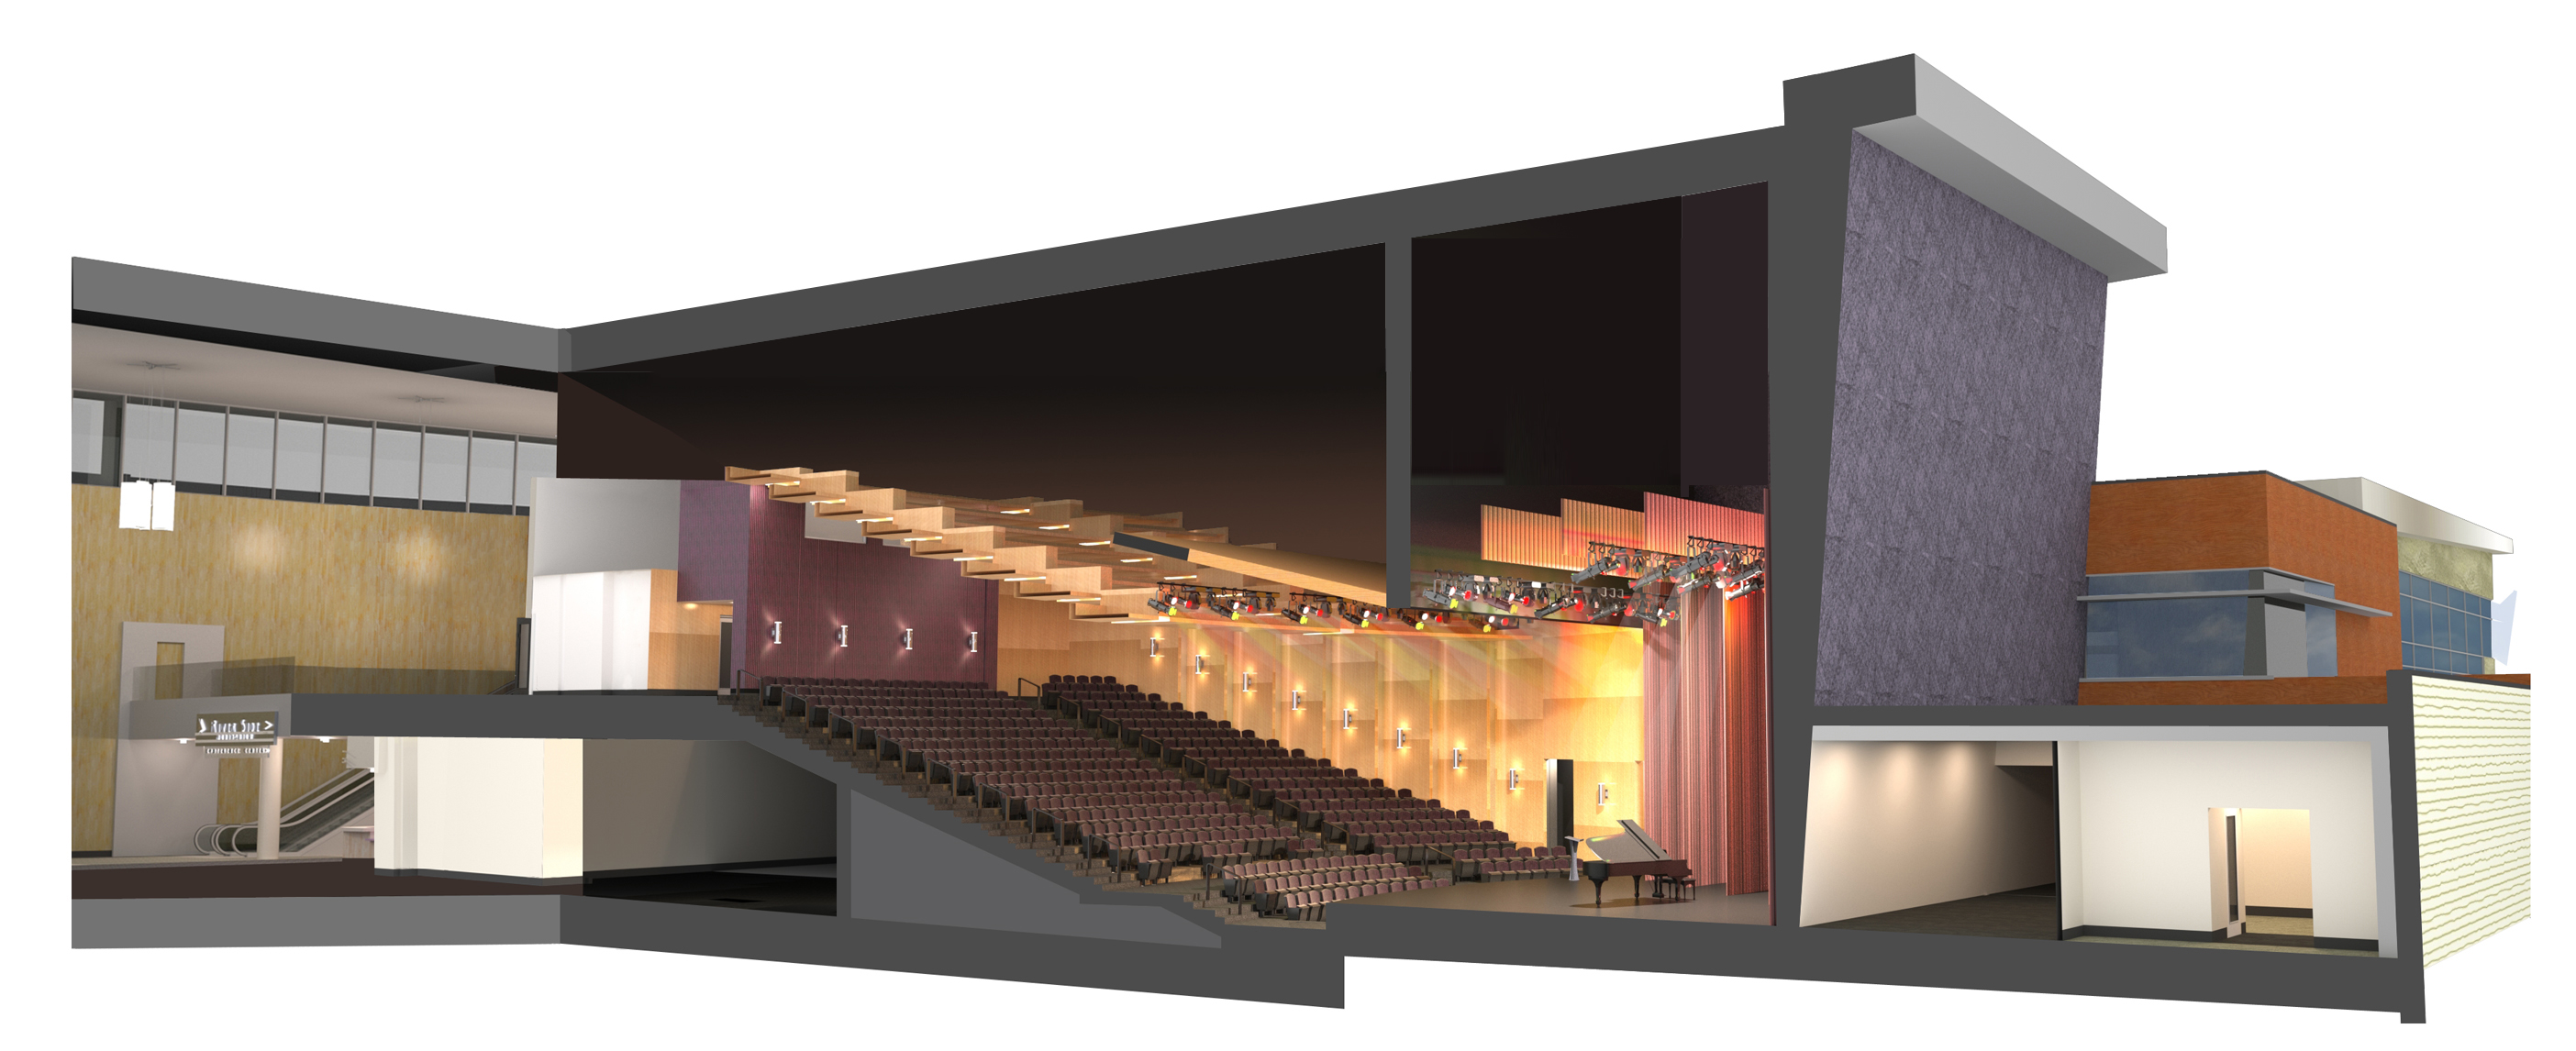 WOF_Auditorium Section